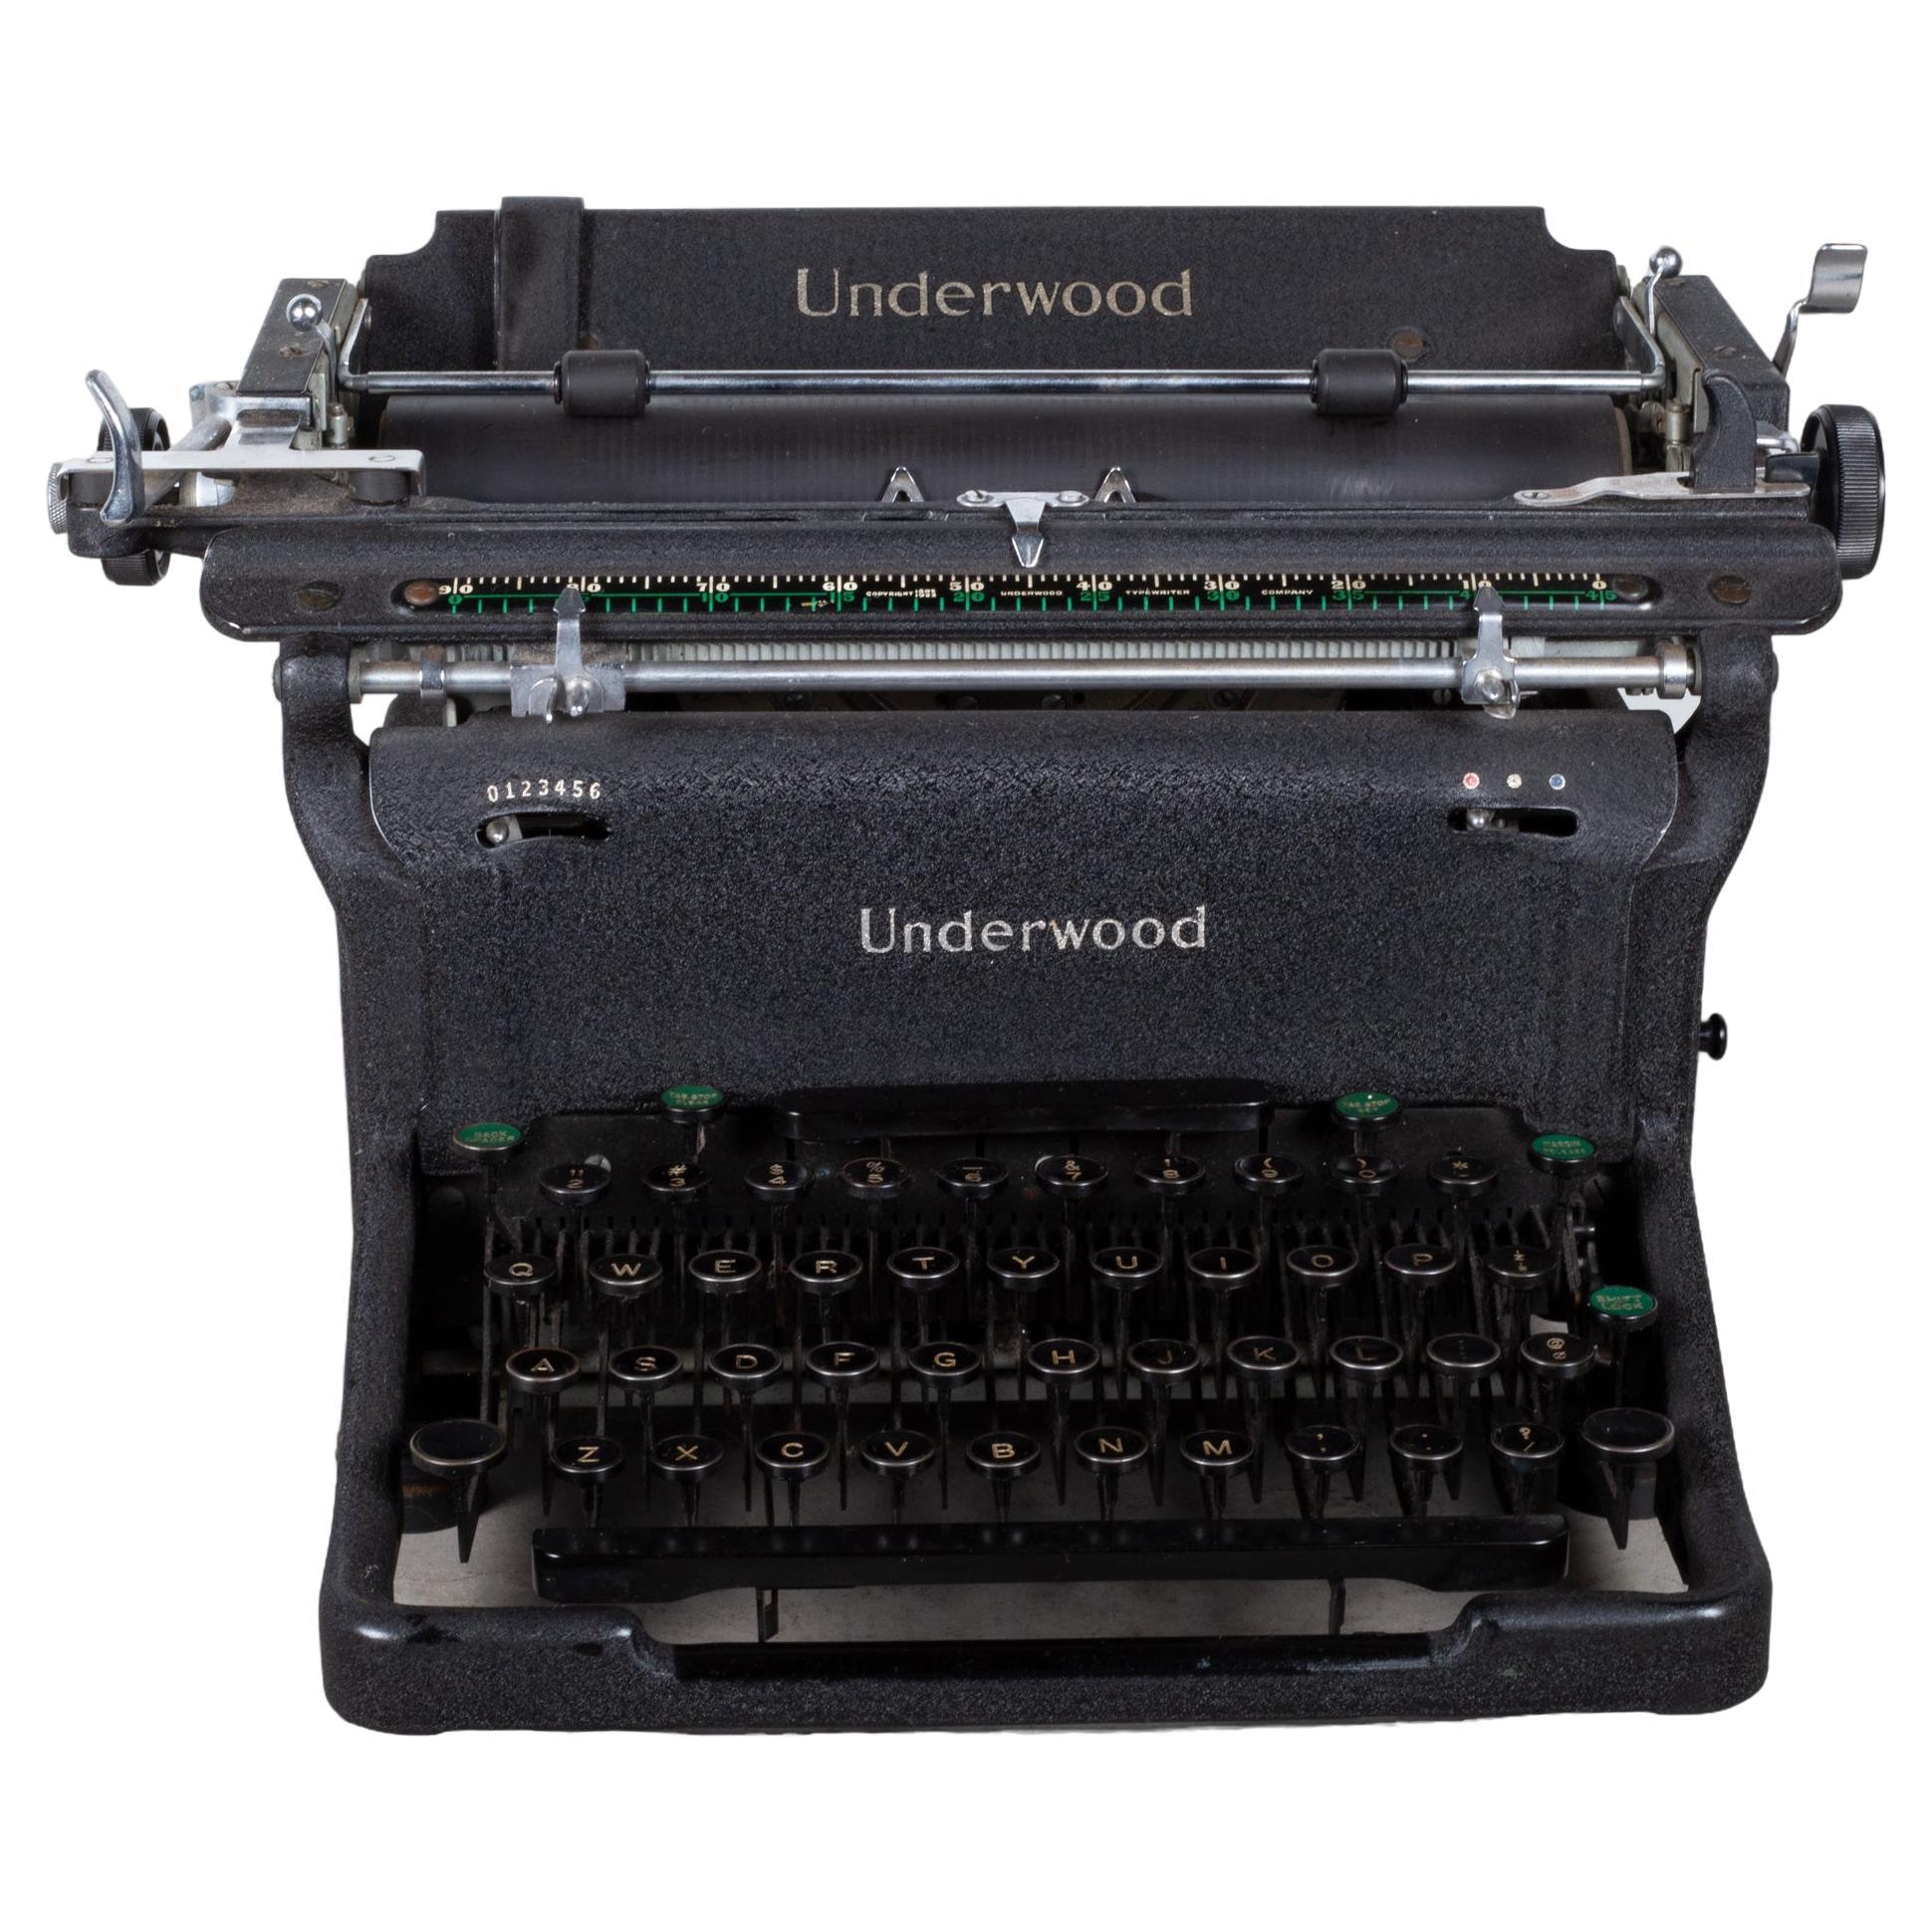 Antigua máquina de escribir Underwood, C.1945